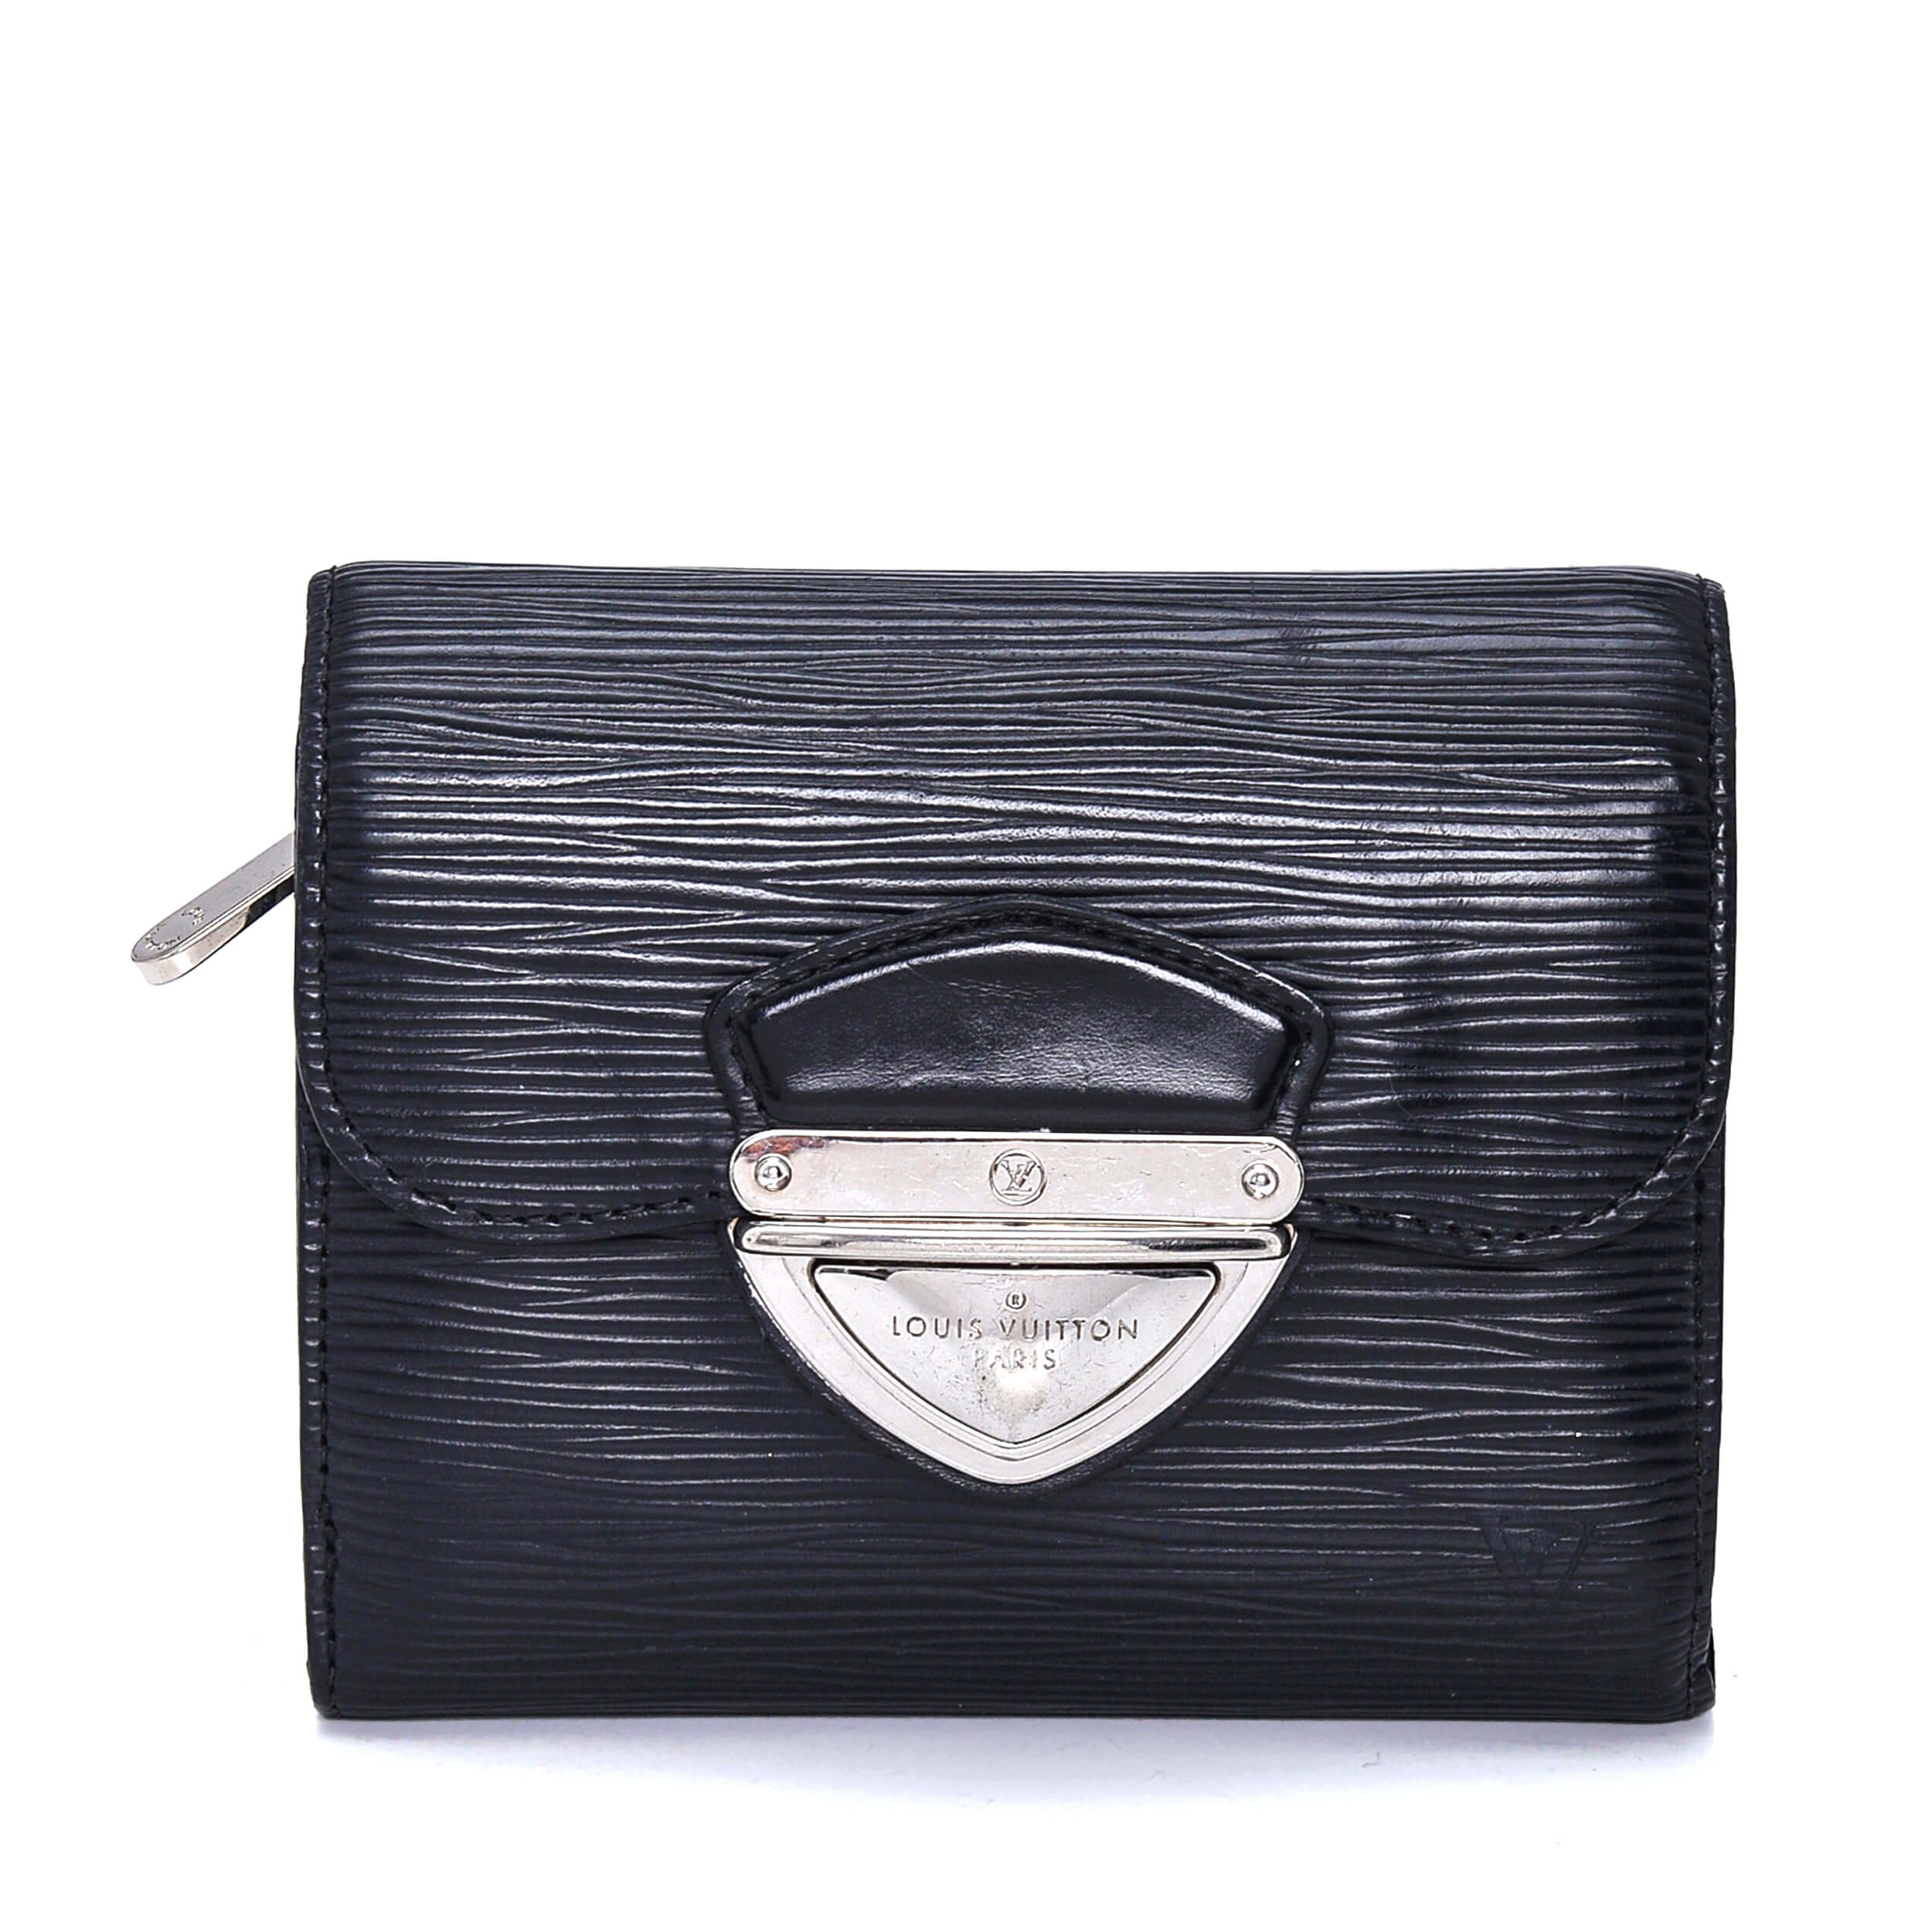 Louis Vuitton - Black Epi Leather Wallet